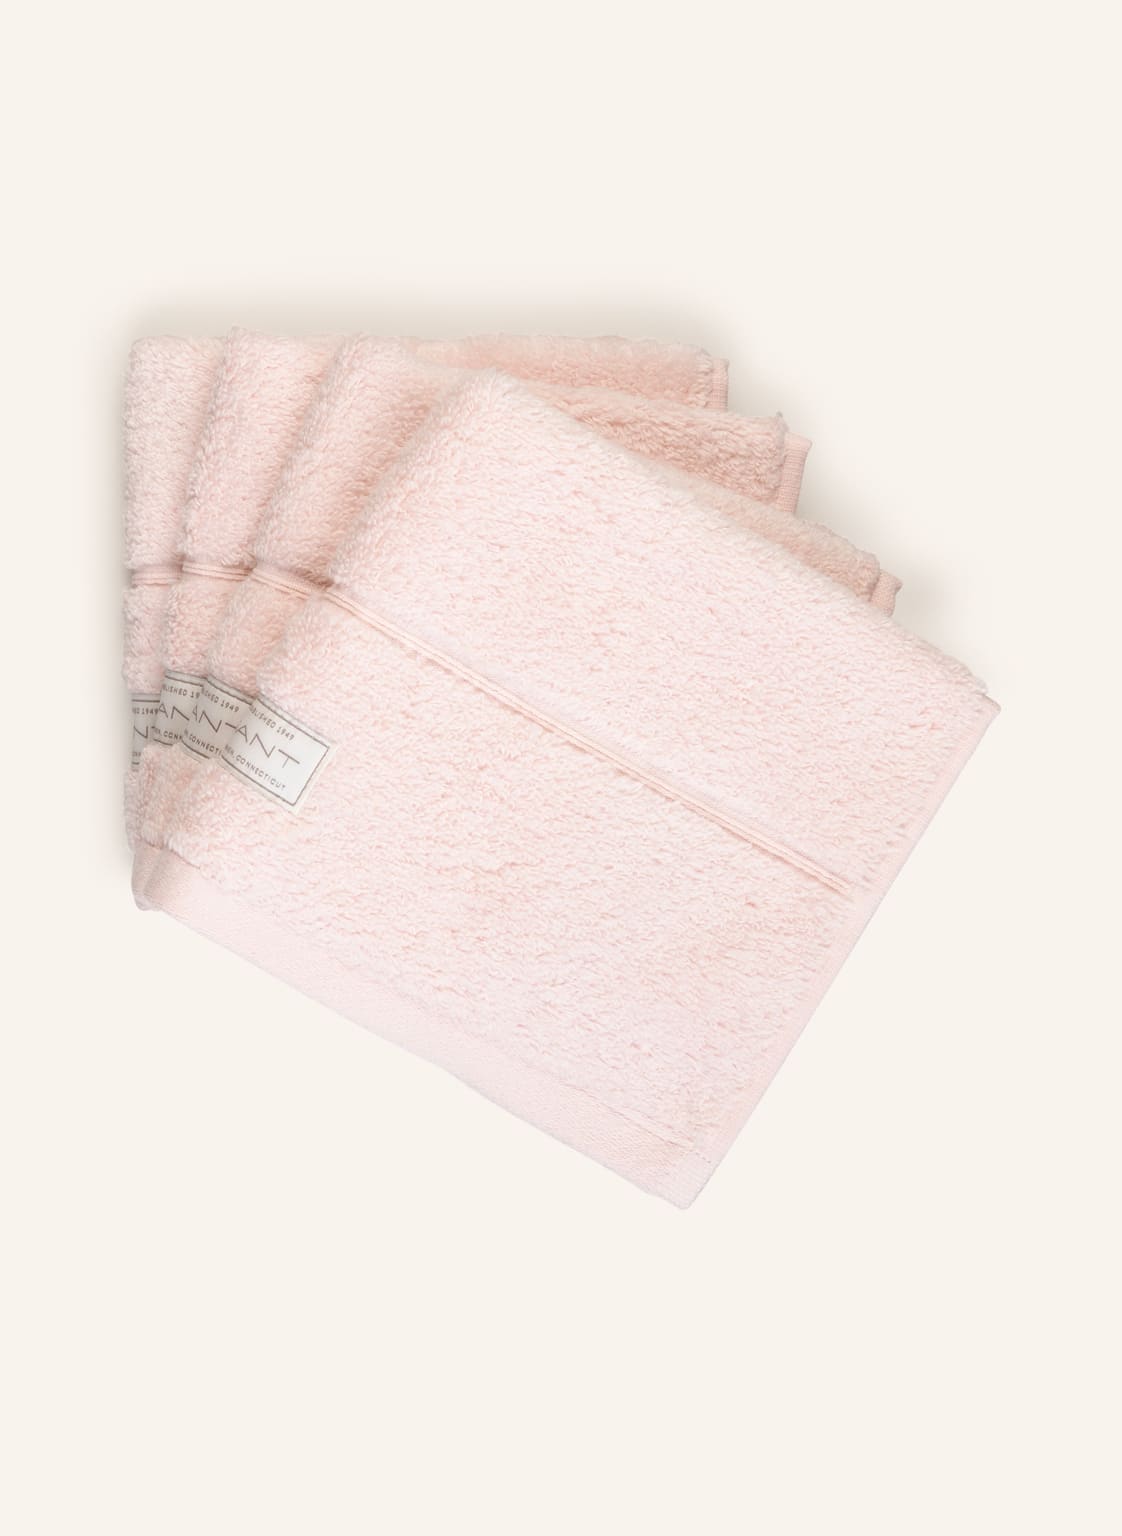 Image of Gant Home 4er-Set Seiftücher pink